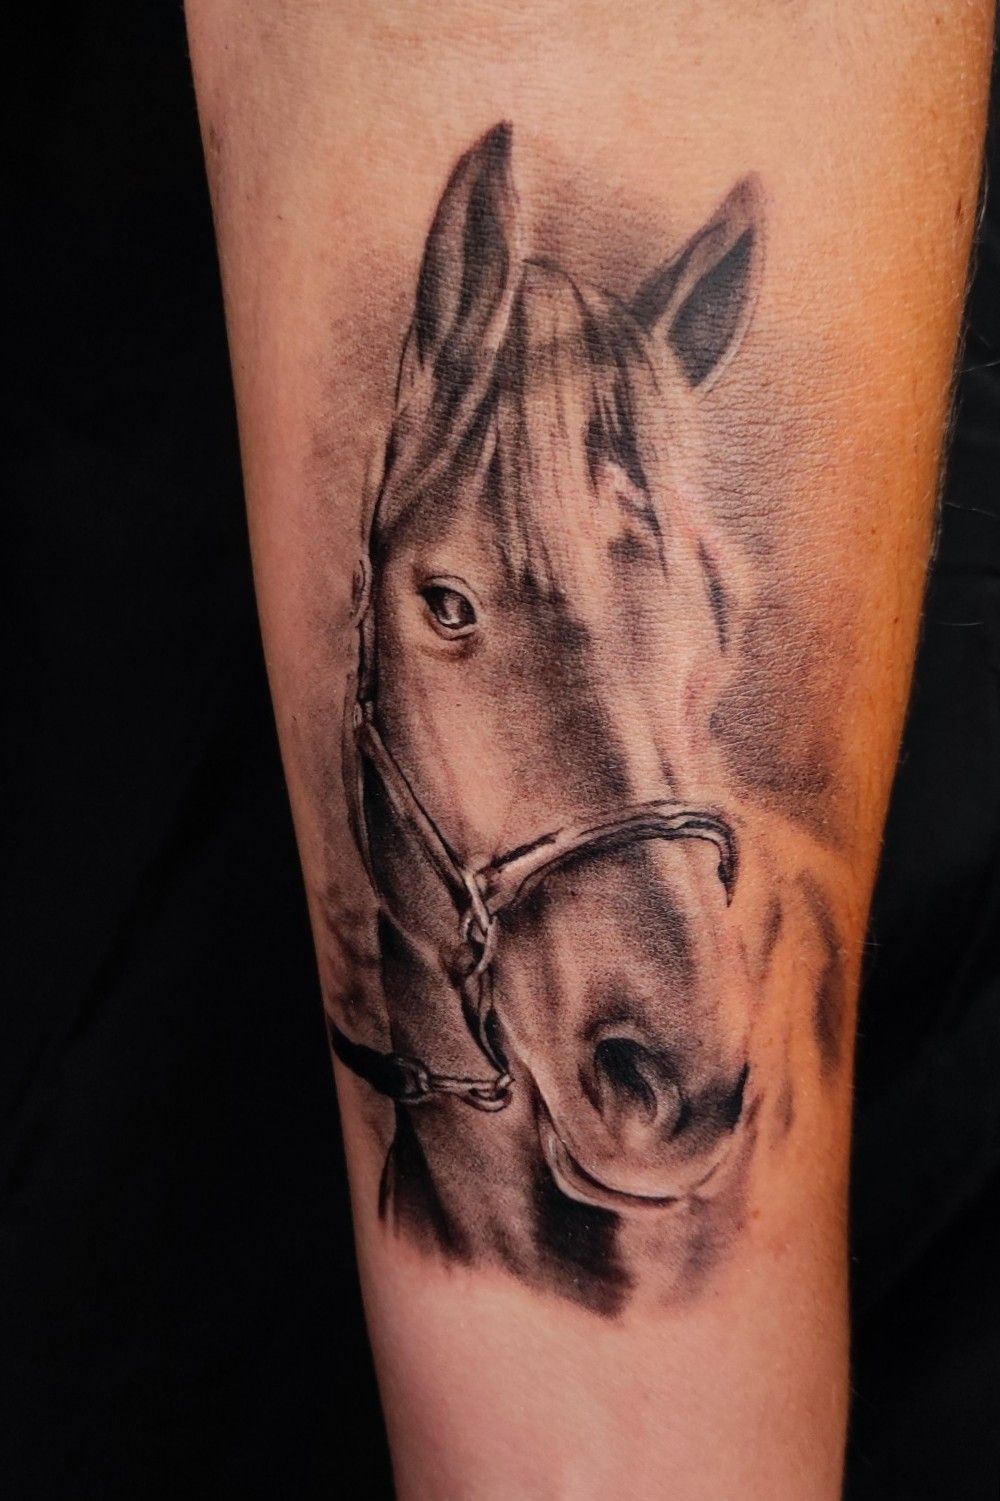 Tattoo uploaded by Daniel • CABALLO realismo una pieza de mis preferidas # tattoo#caballo#inktattoo#realismotattoo • Tattoodo